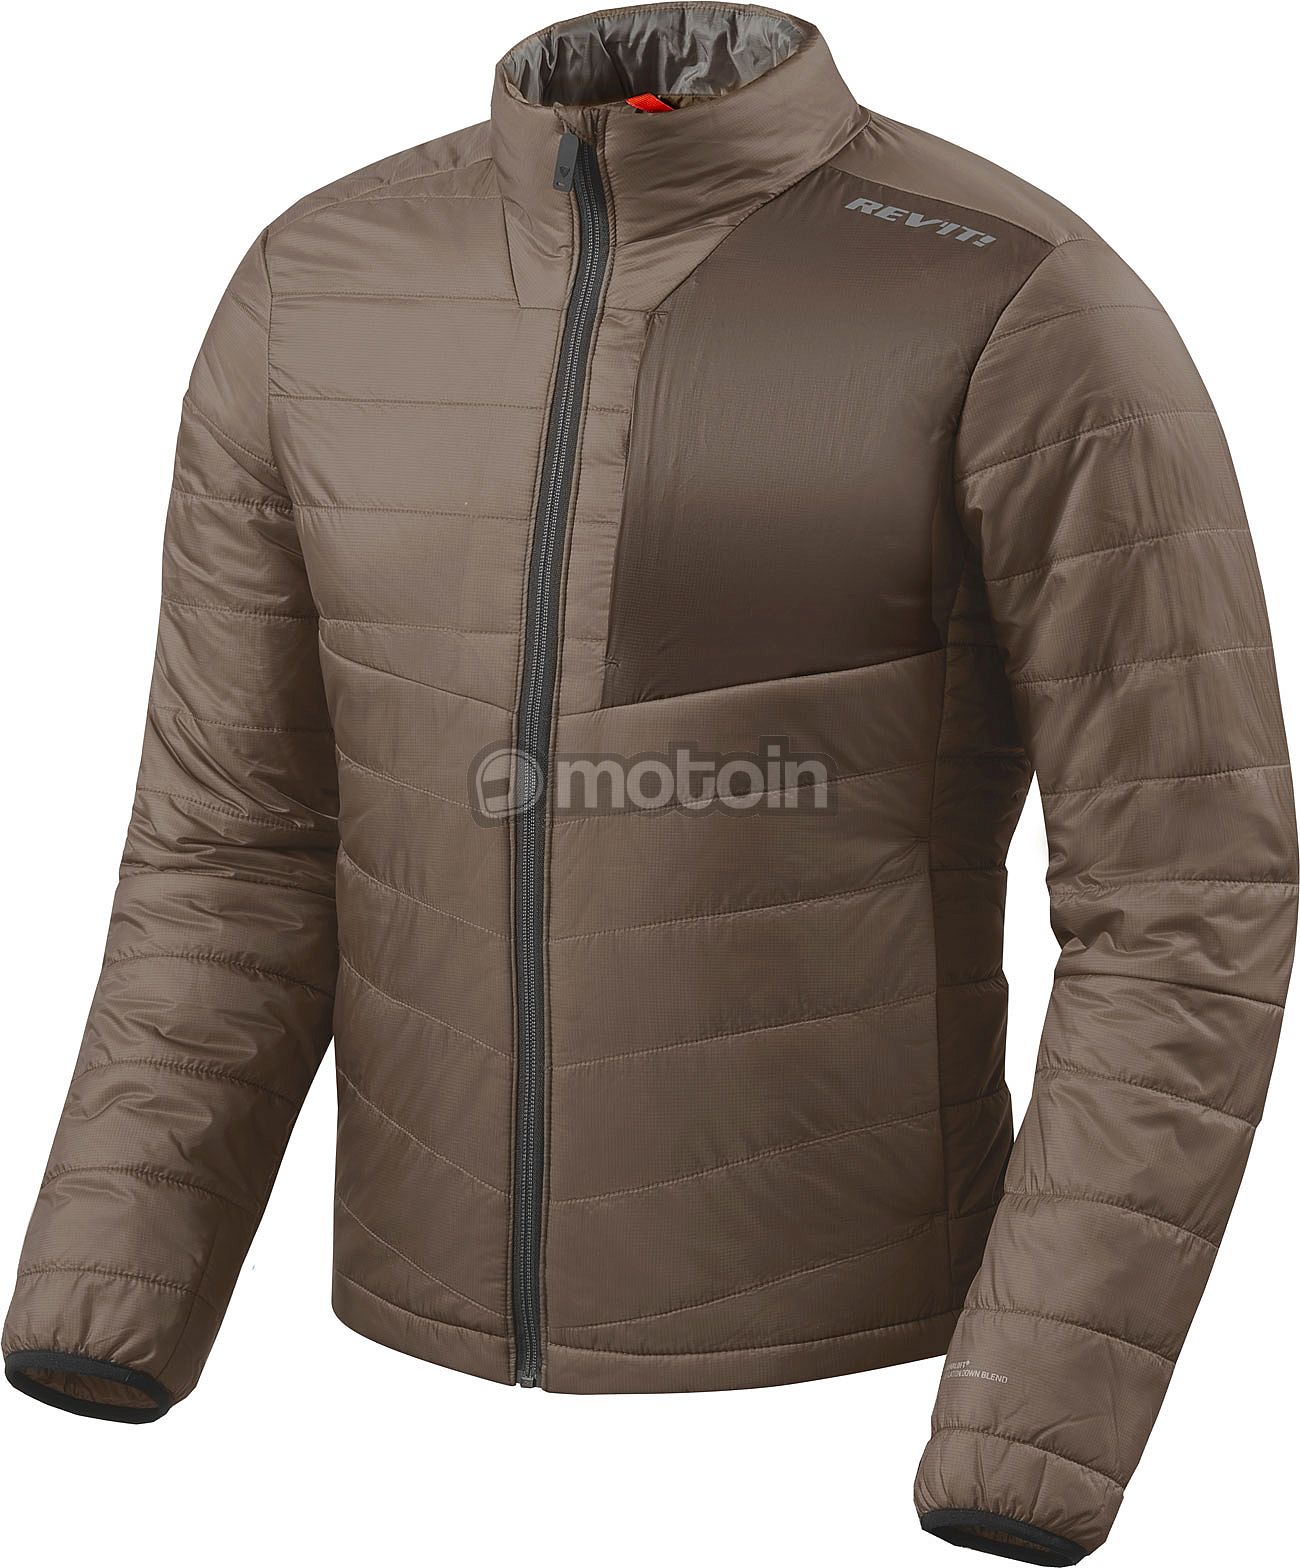 Revit Solar 2, functional jacket